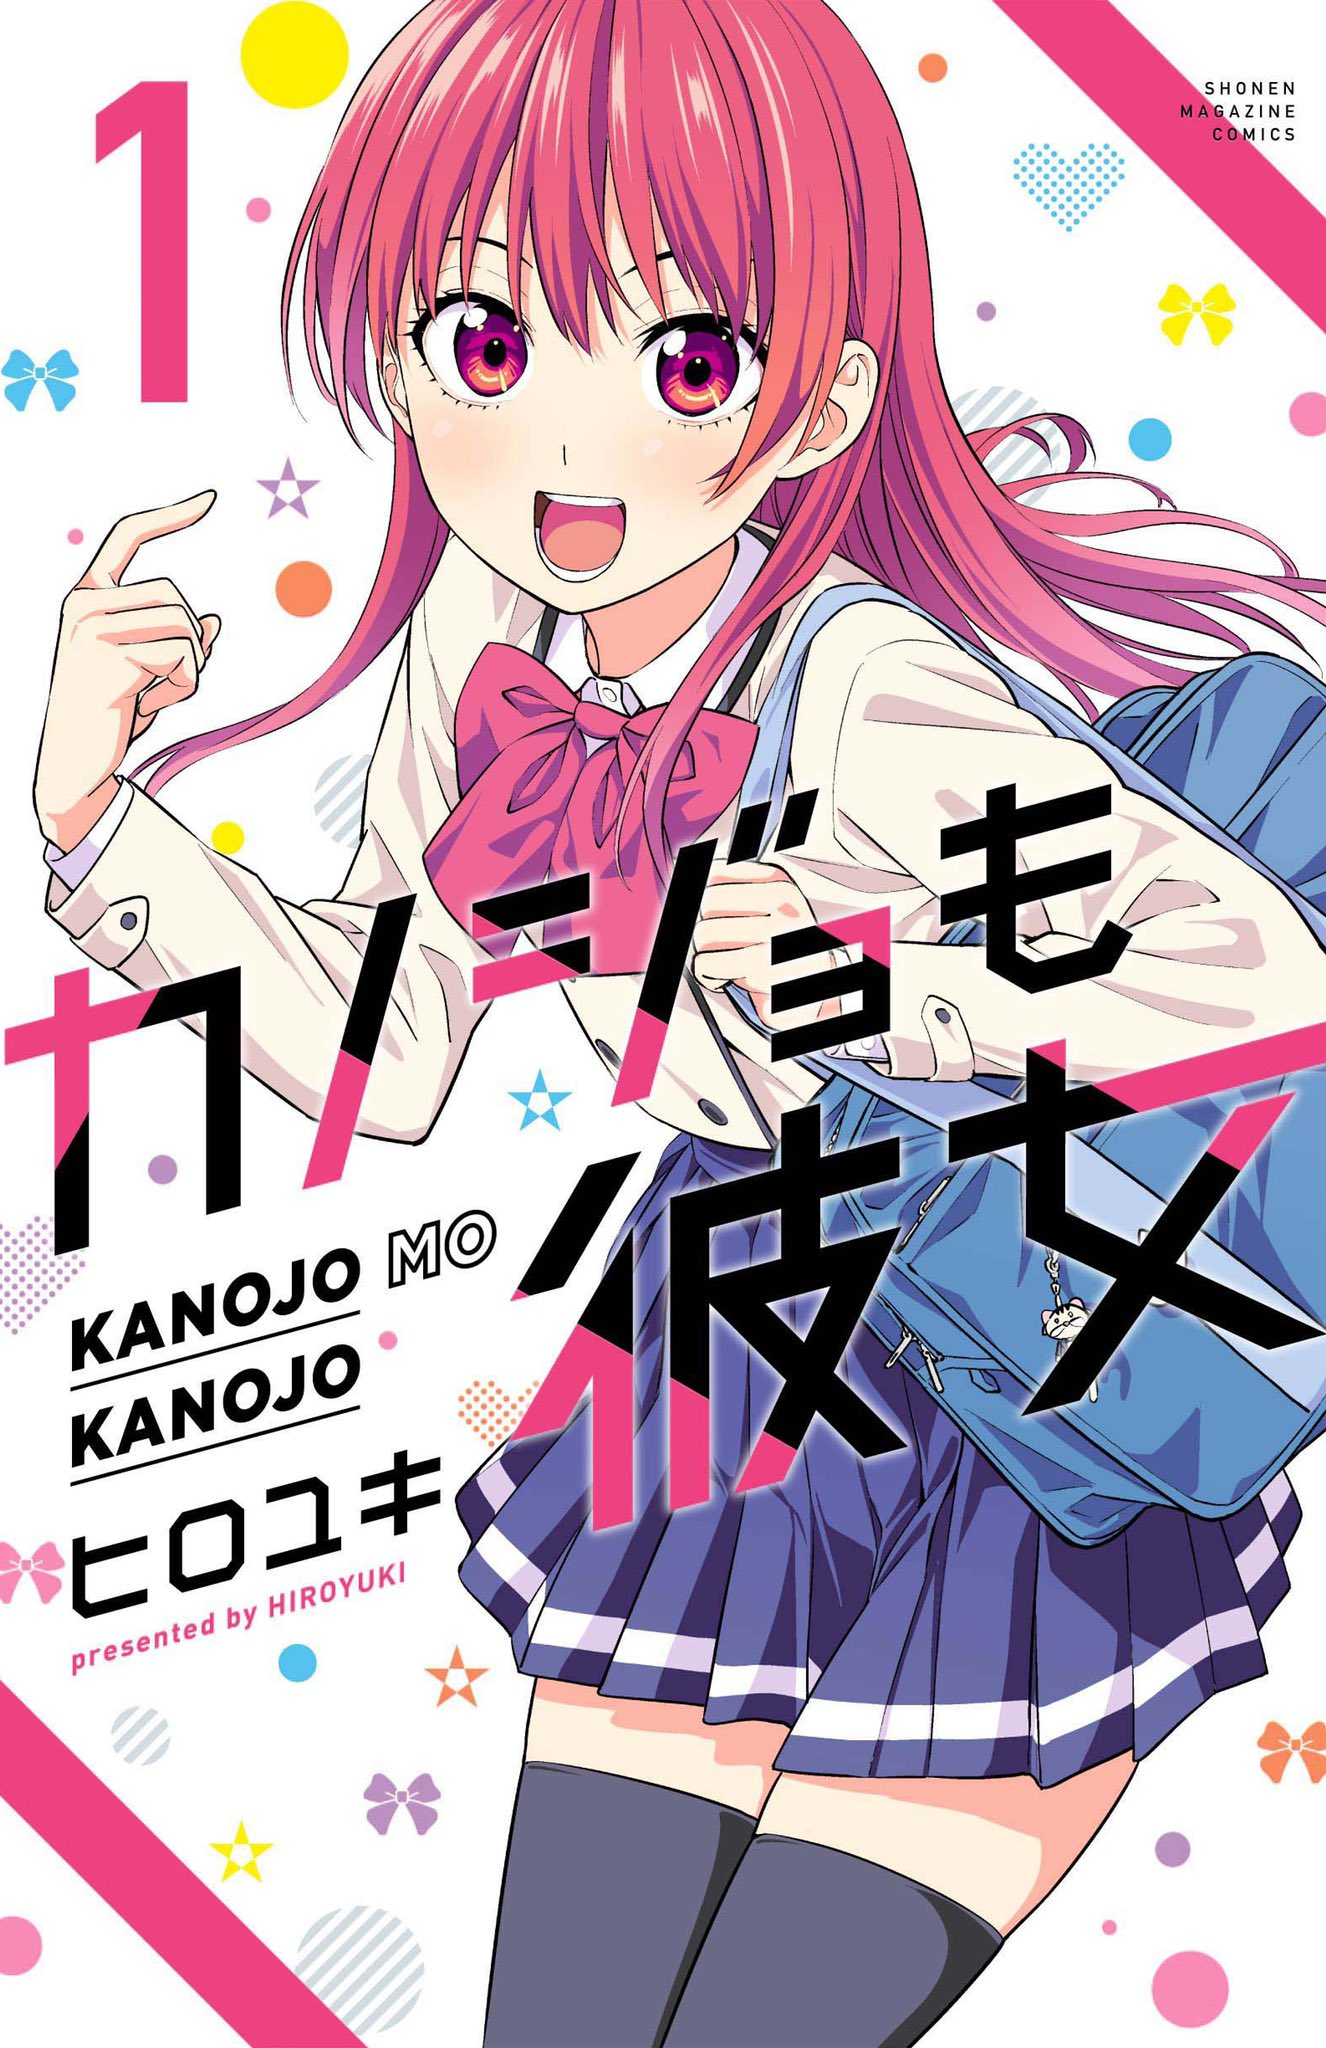 Kanojo mo Kanojo, Chapter 83 - English Scans